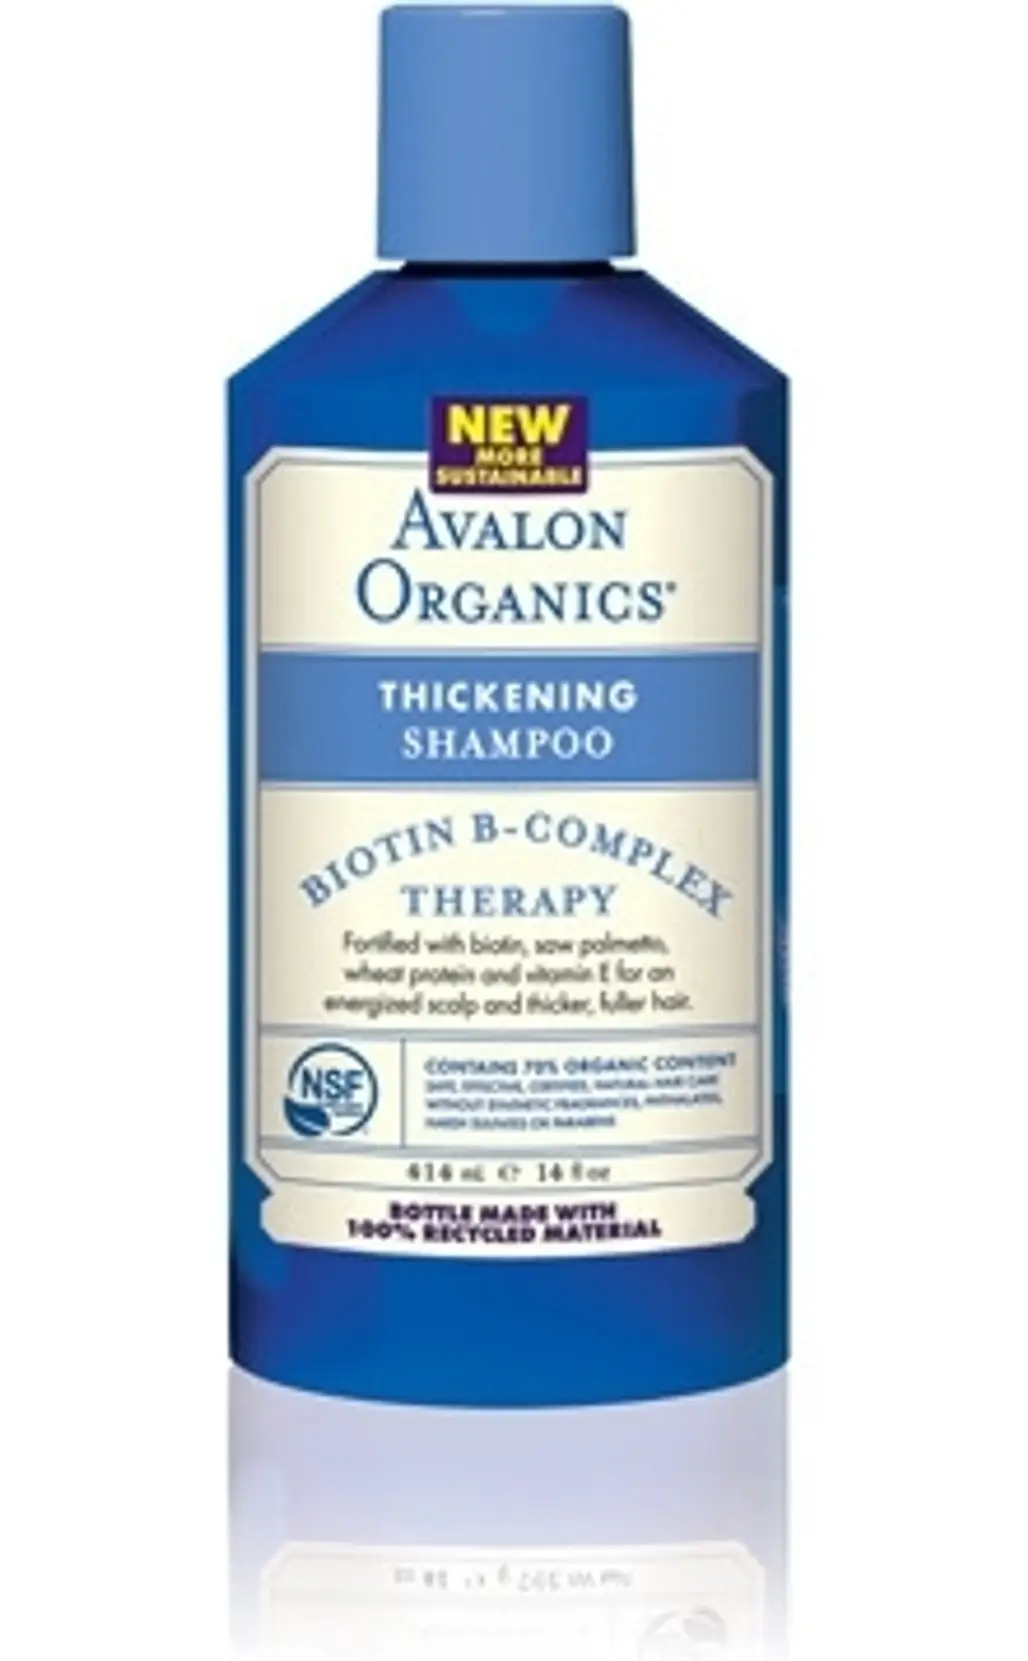 Avalon Organics Shampoo, Thickening, Biotin B-Complex